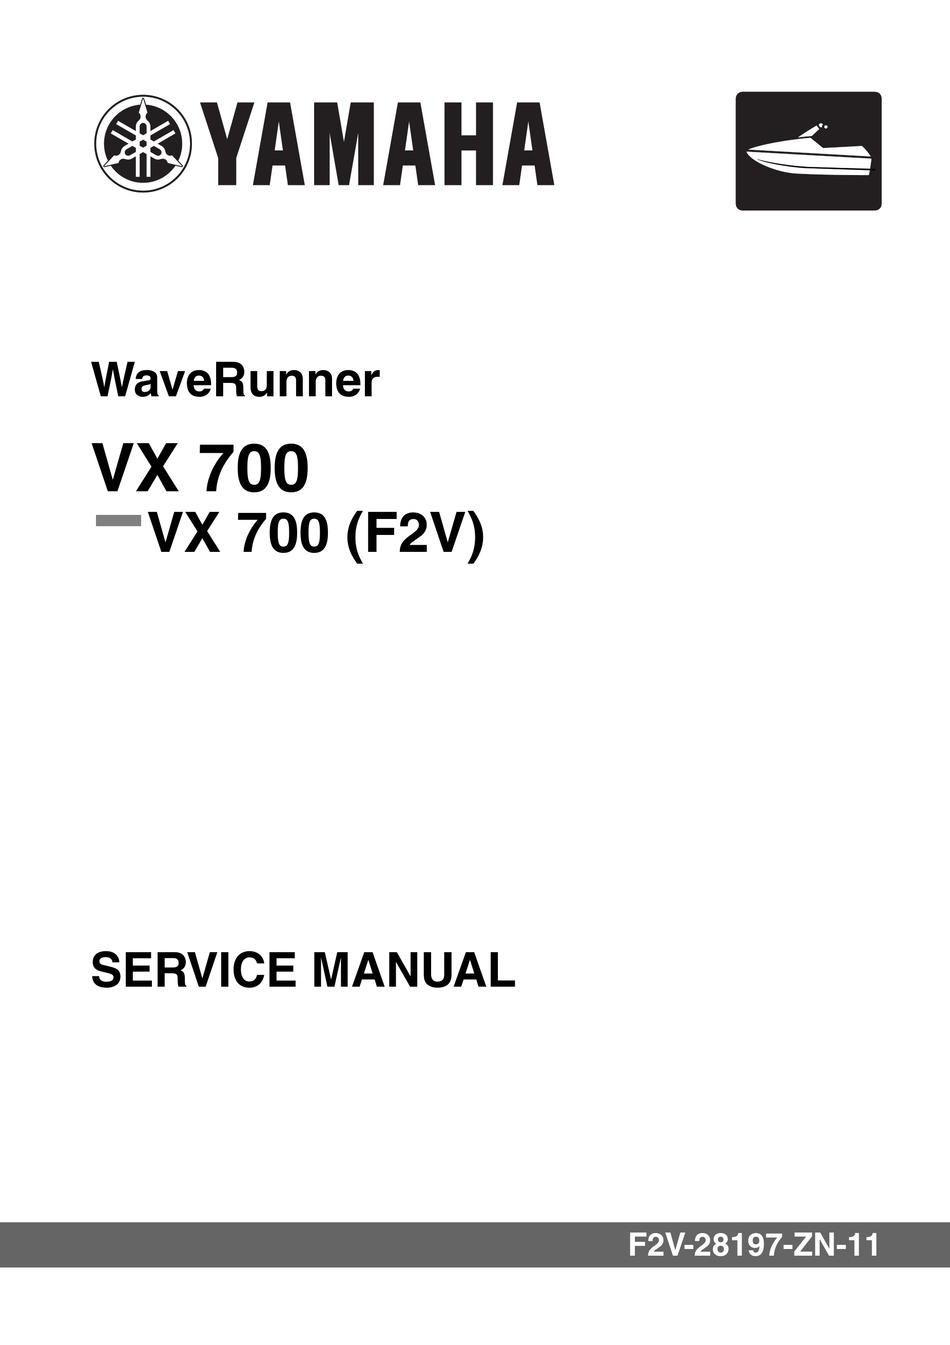 Yamaha Waverunner Vx 700 Service Manual Pdf Download Manualslib